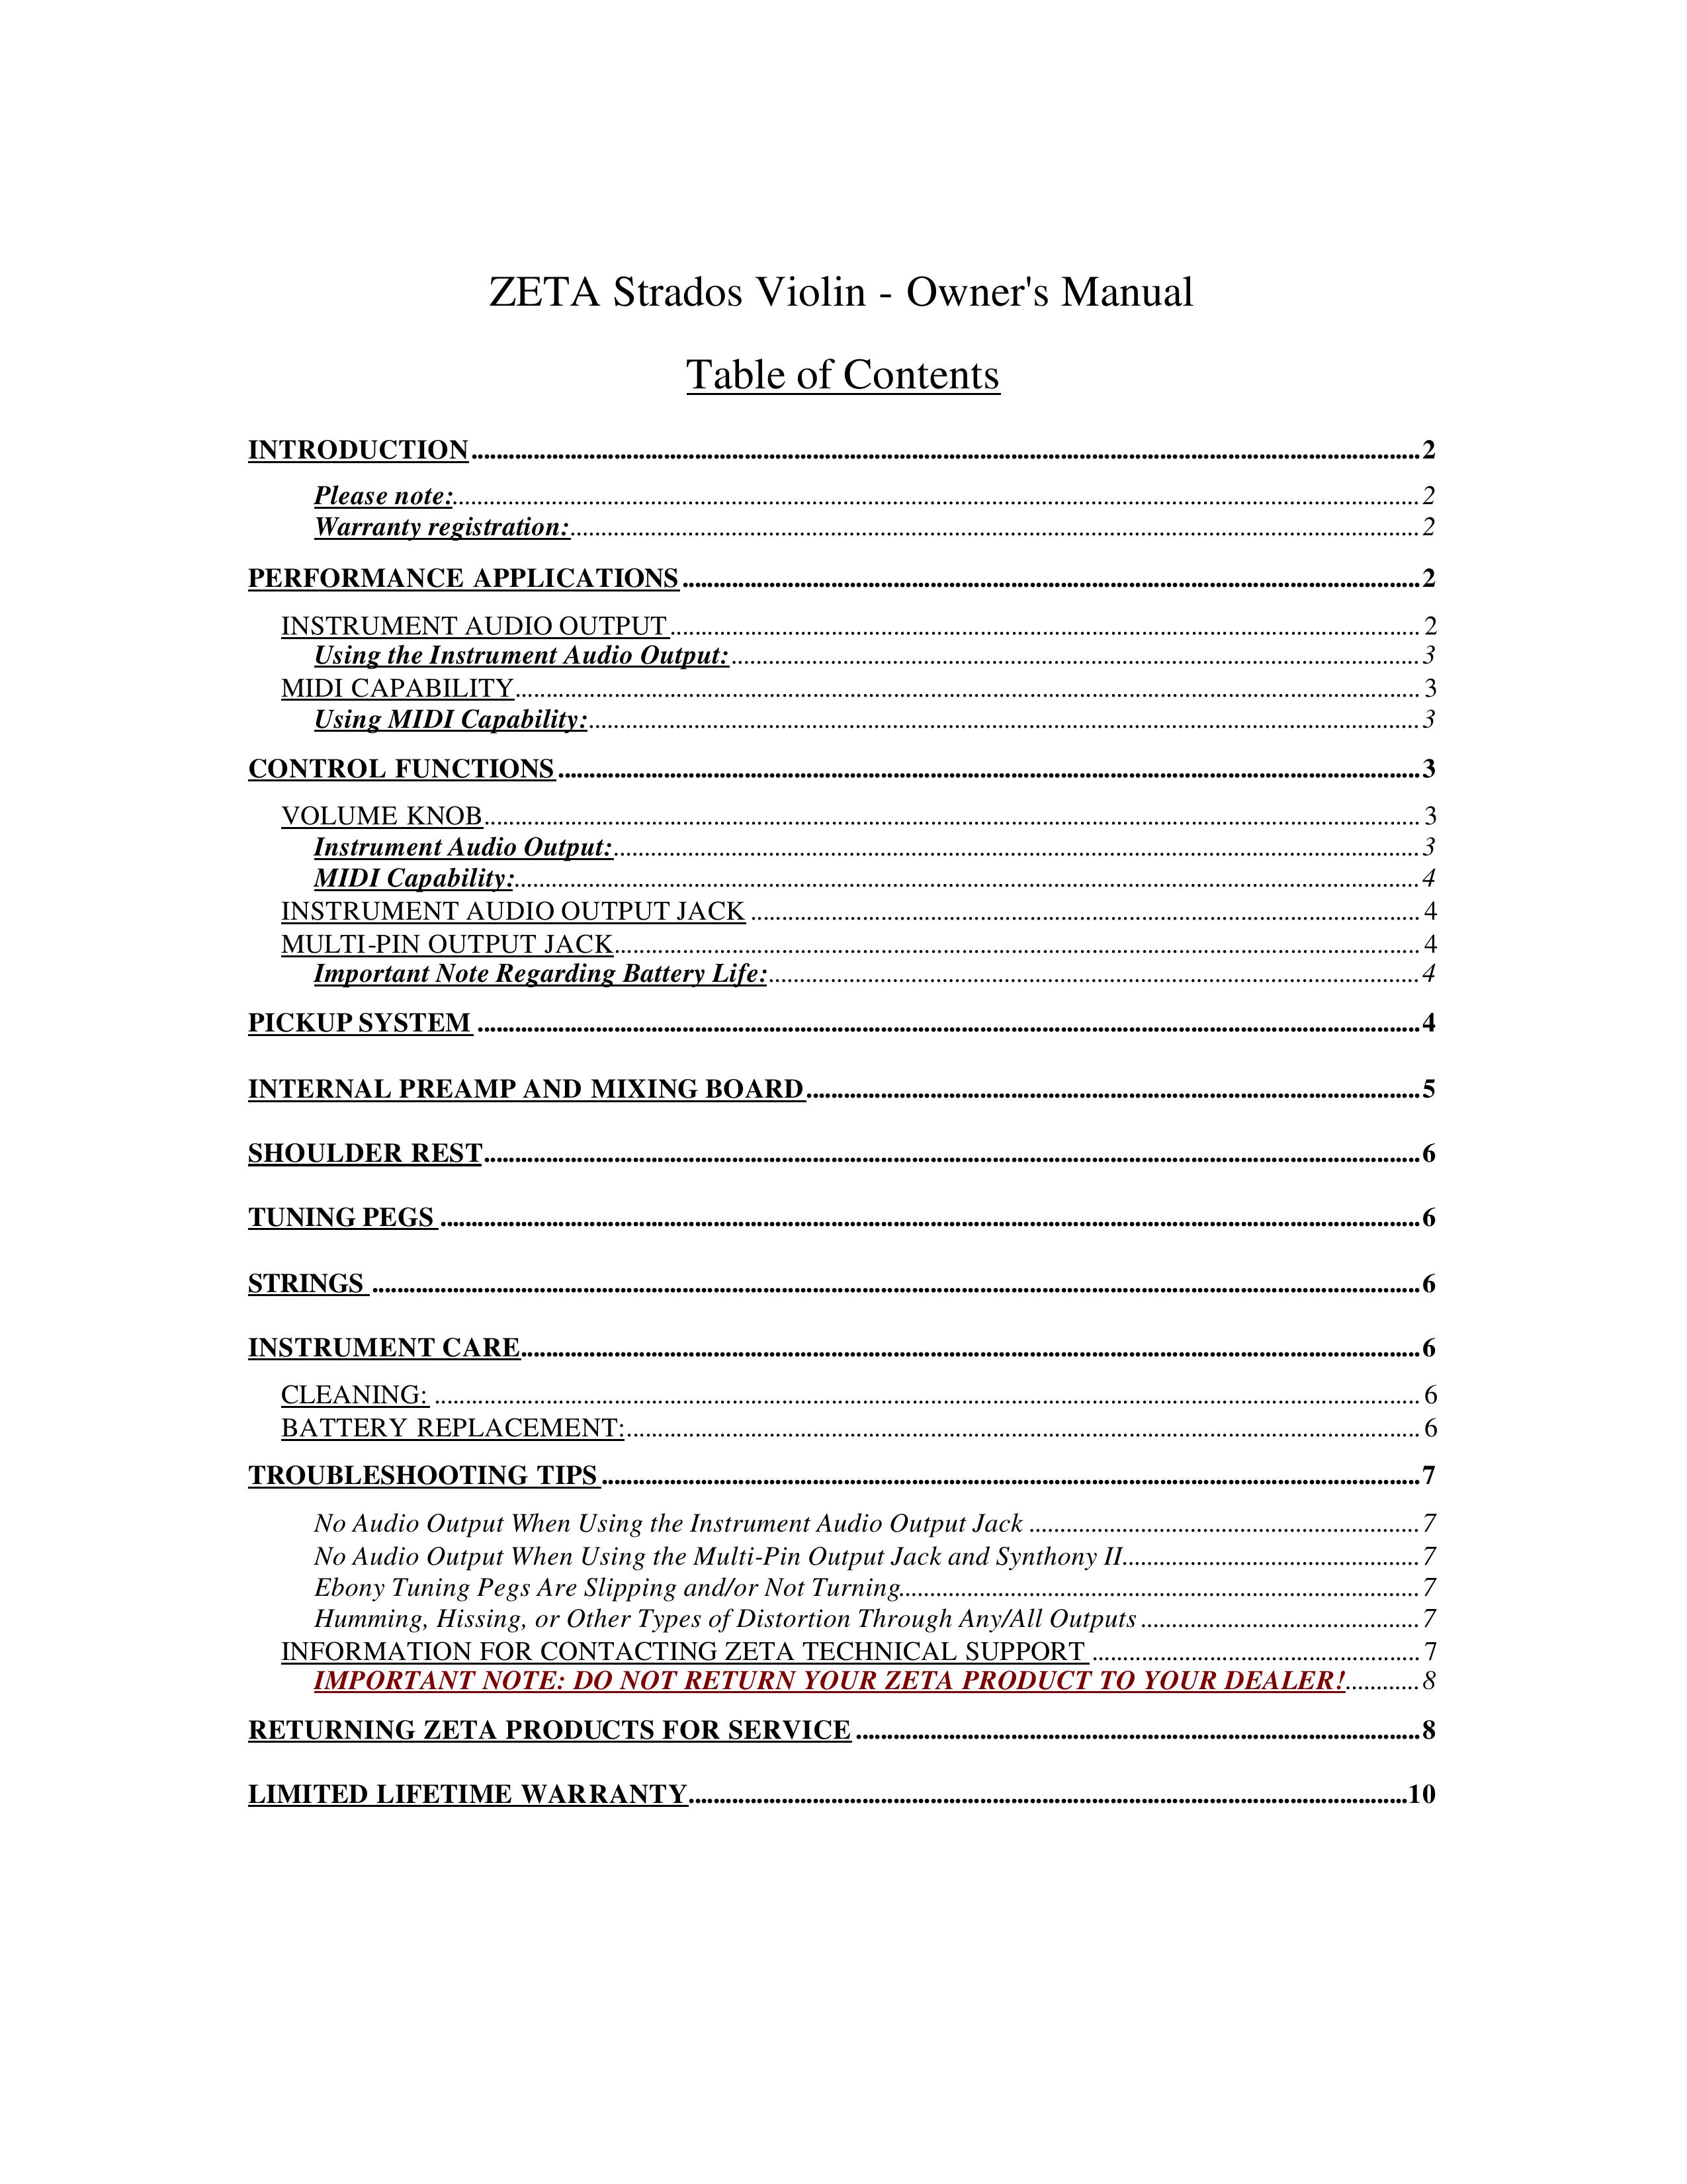 ZETA Music Systems Strados Violin Musical Instrument User Manual